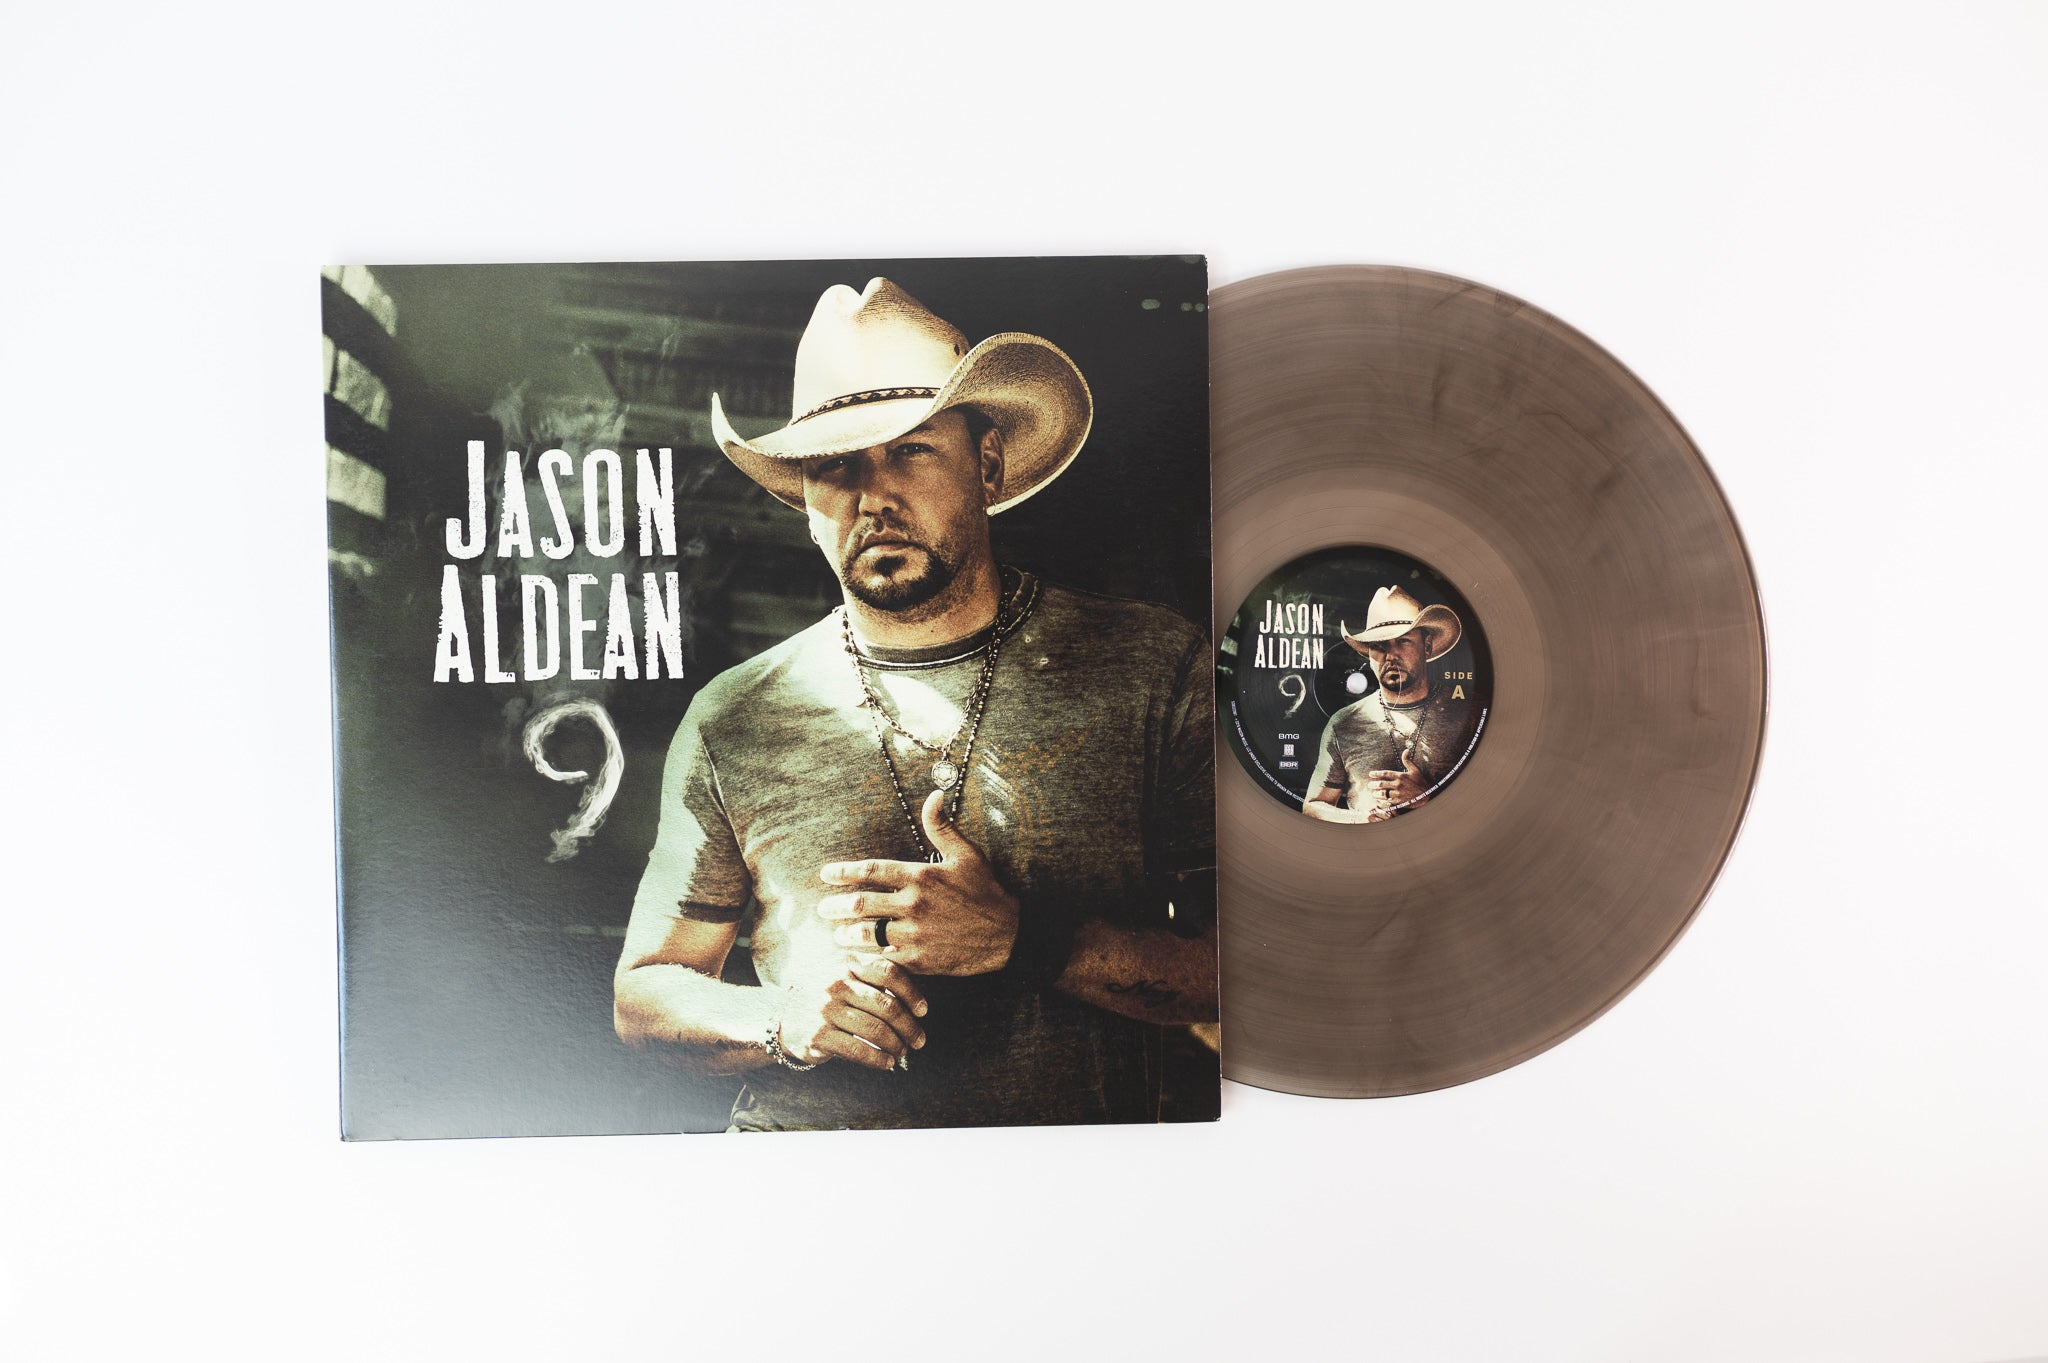 Jason Aldean - 9 on Broken Bow Smoke Colored Vinyl